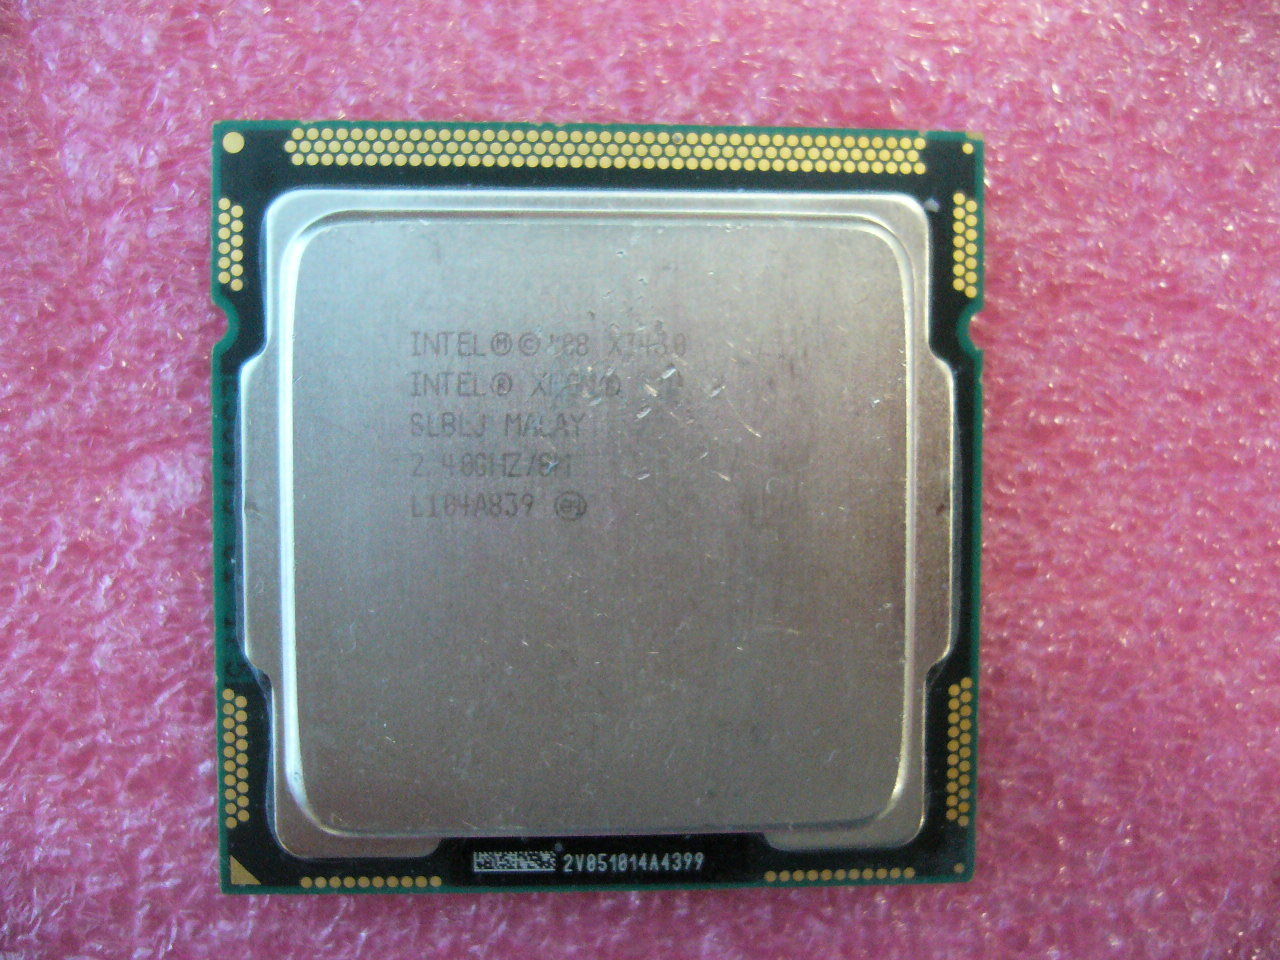 QTY 1x INTEL Xeon CPU X3430 2.40GHZ/8MB LGA1156 SLBLJ